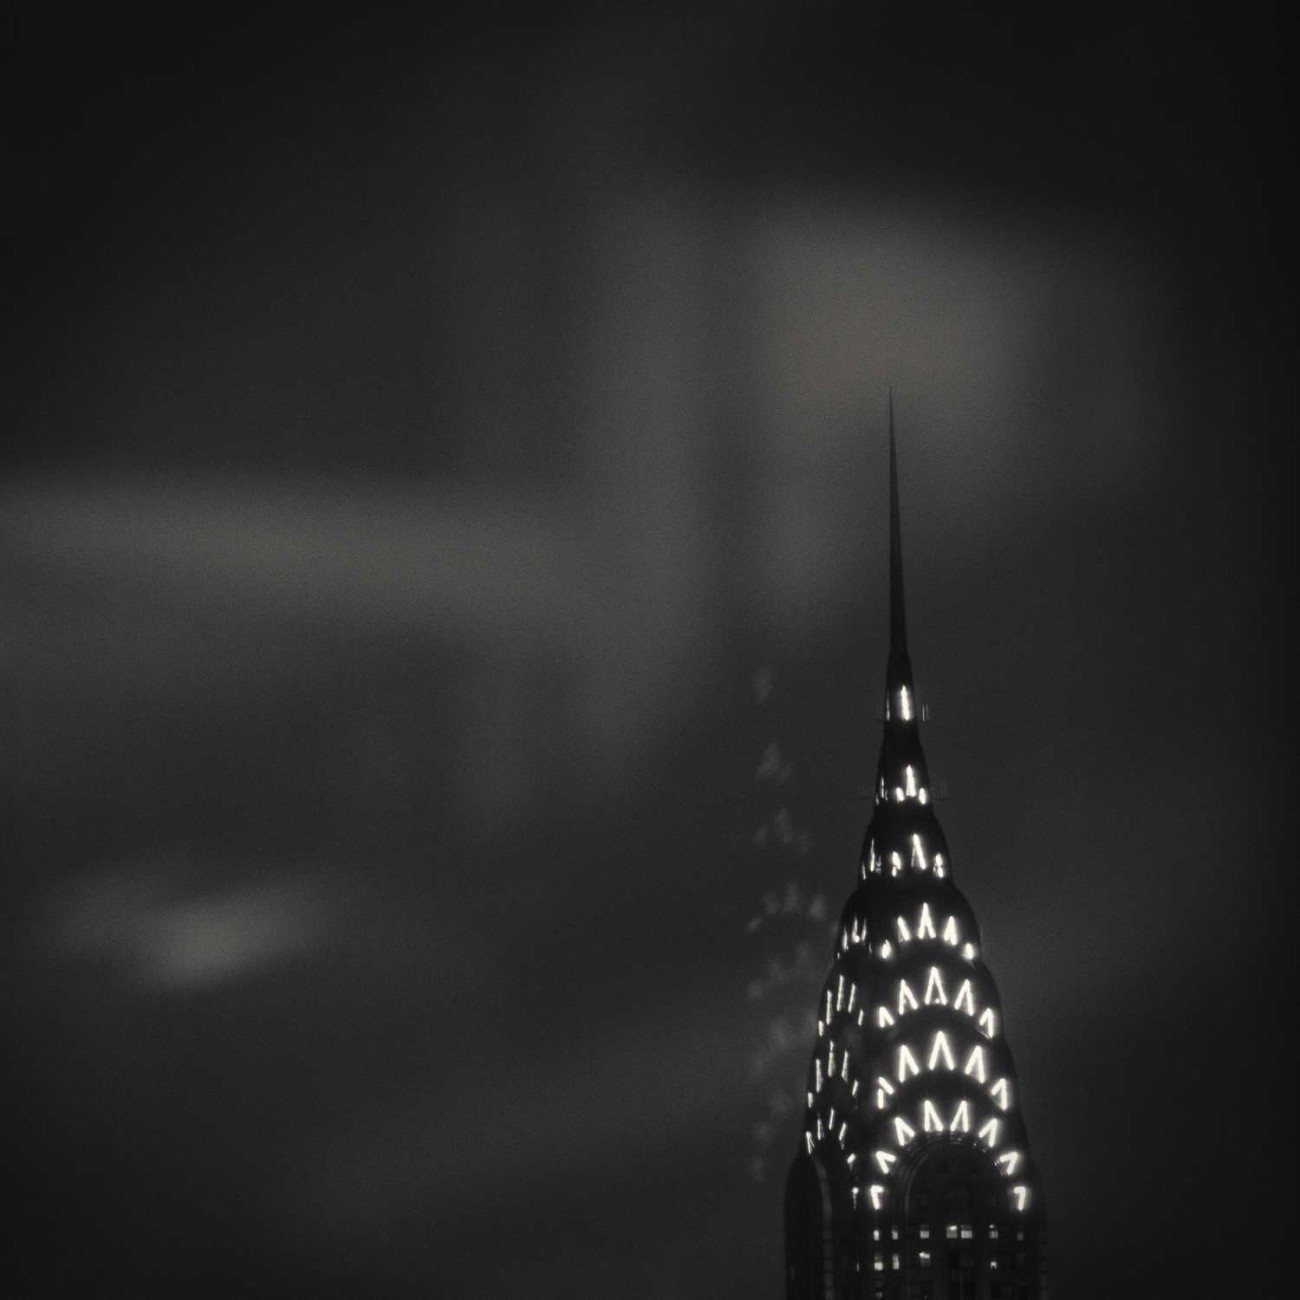 Chrysler Building night reflection, NY, 2015